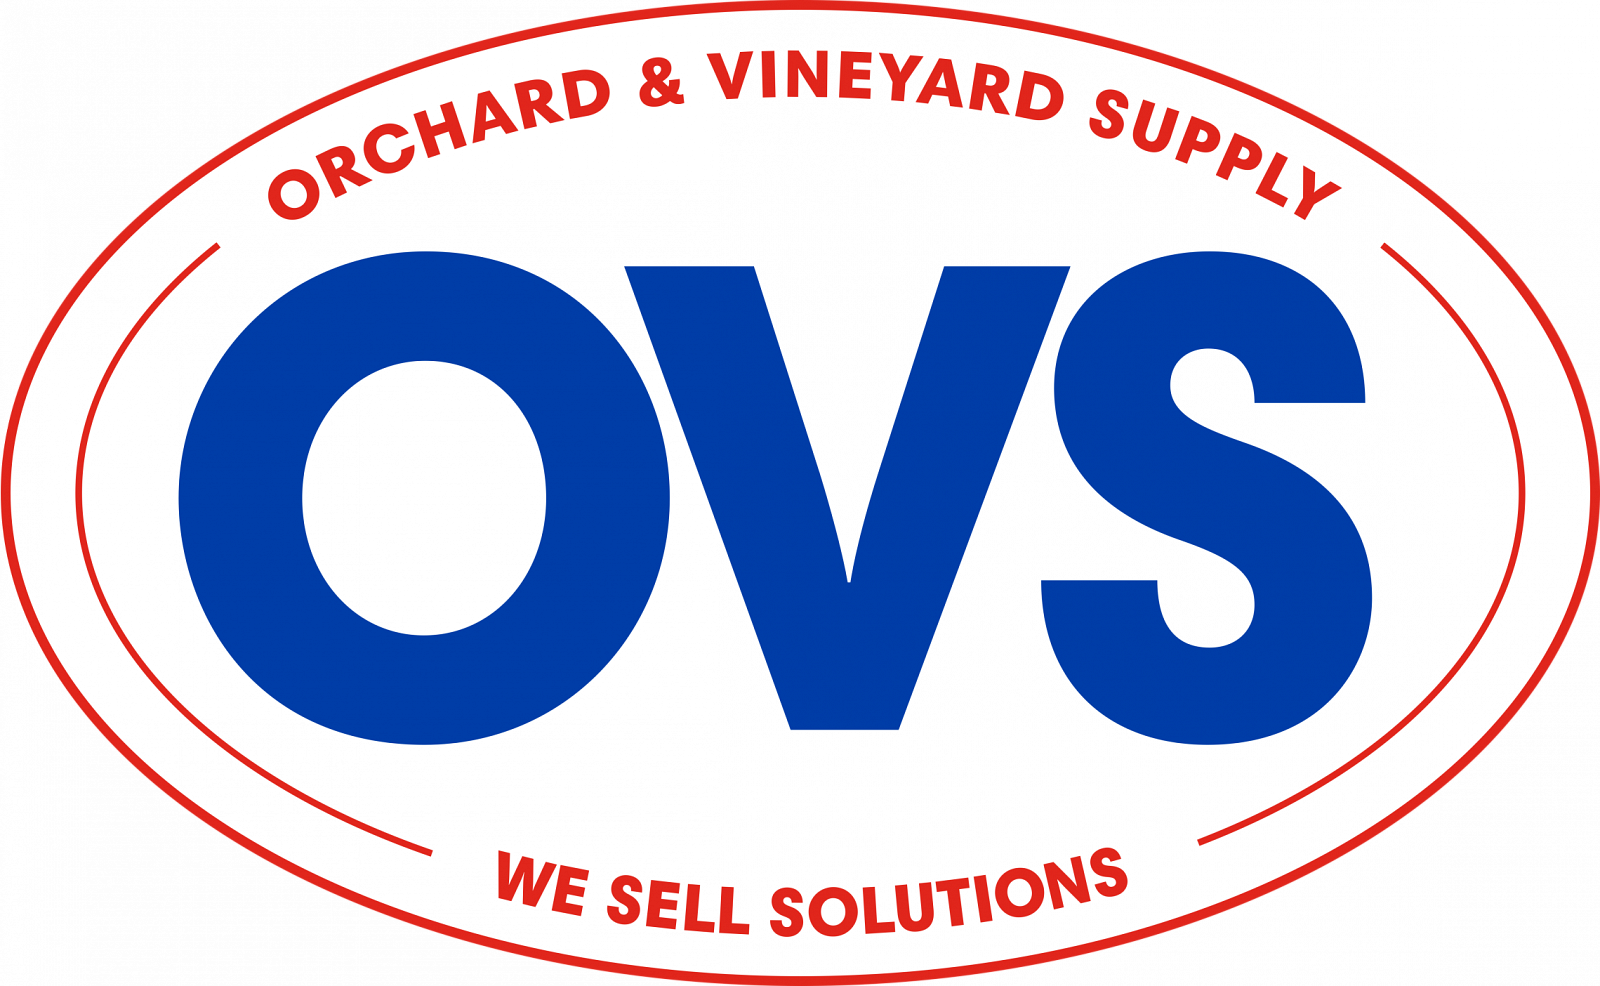 Orchard & Vineyard Supply